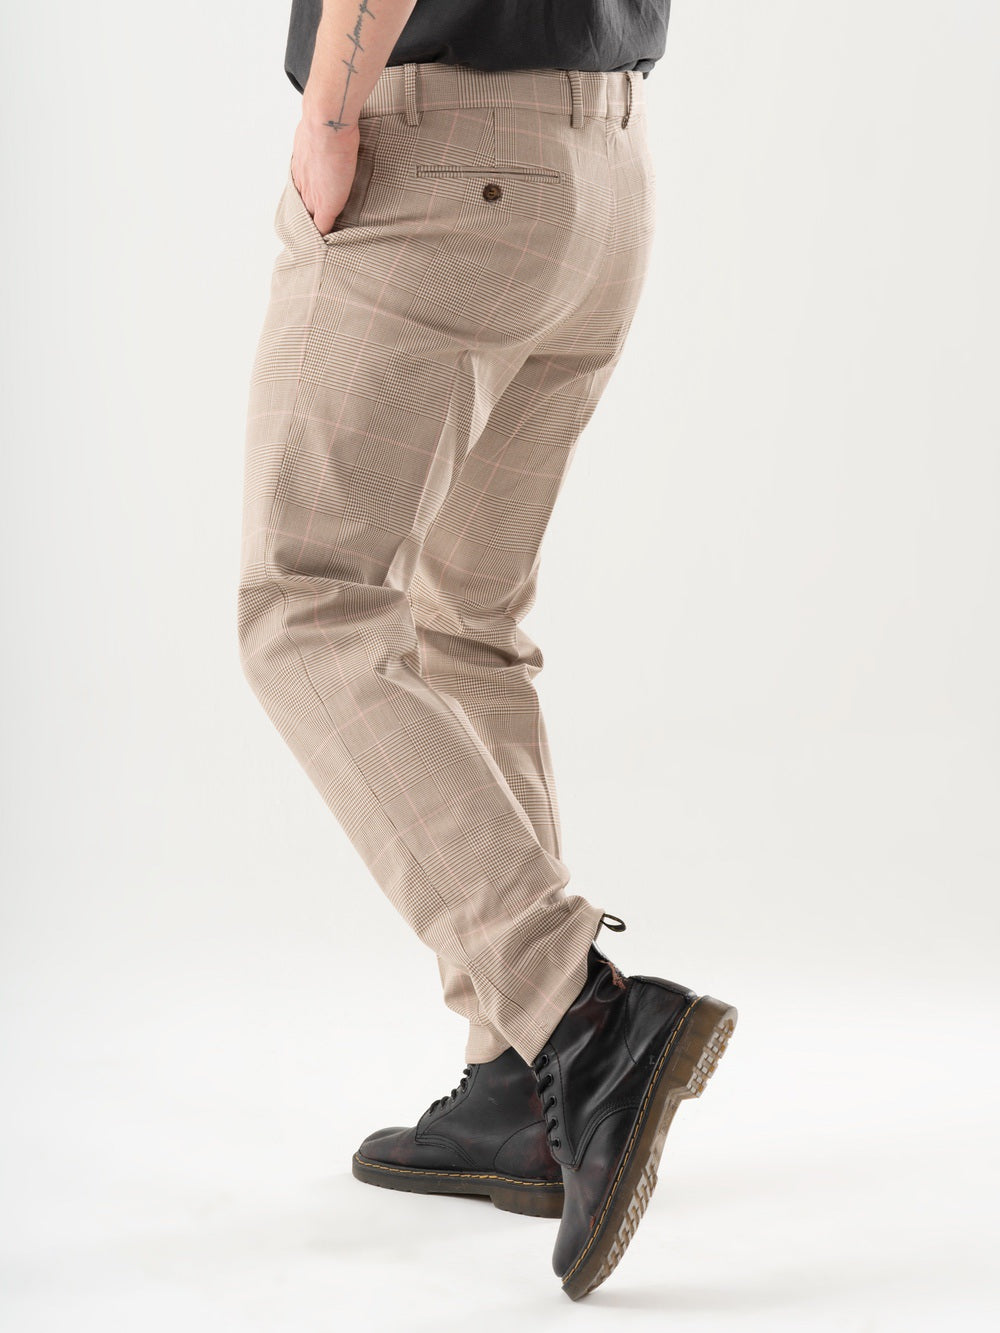 A man is standing in a studio wearing Moonshot pants.